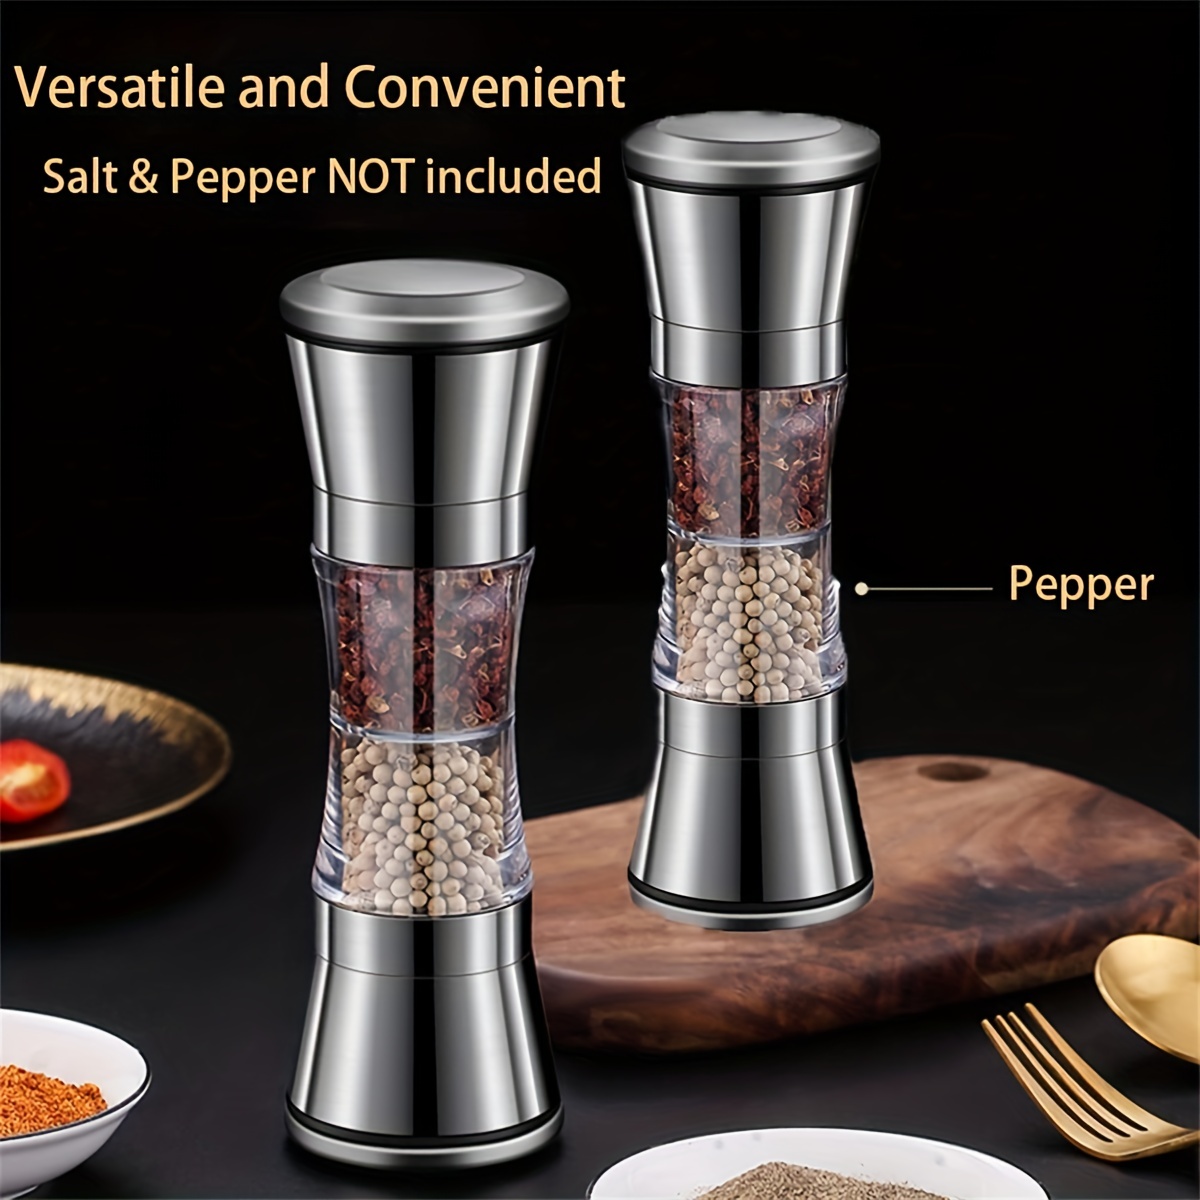 2 In 1 Pepper Mill Manual Stainless Steel Salt and Pepper Grinder Set with  Adjustable Ceramic Grinding Spice Grinder KitchenTool